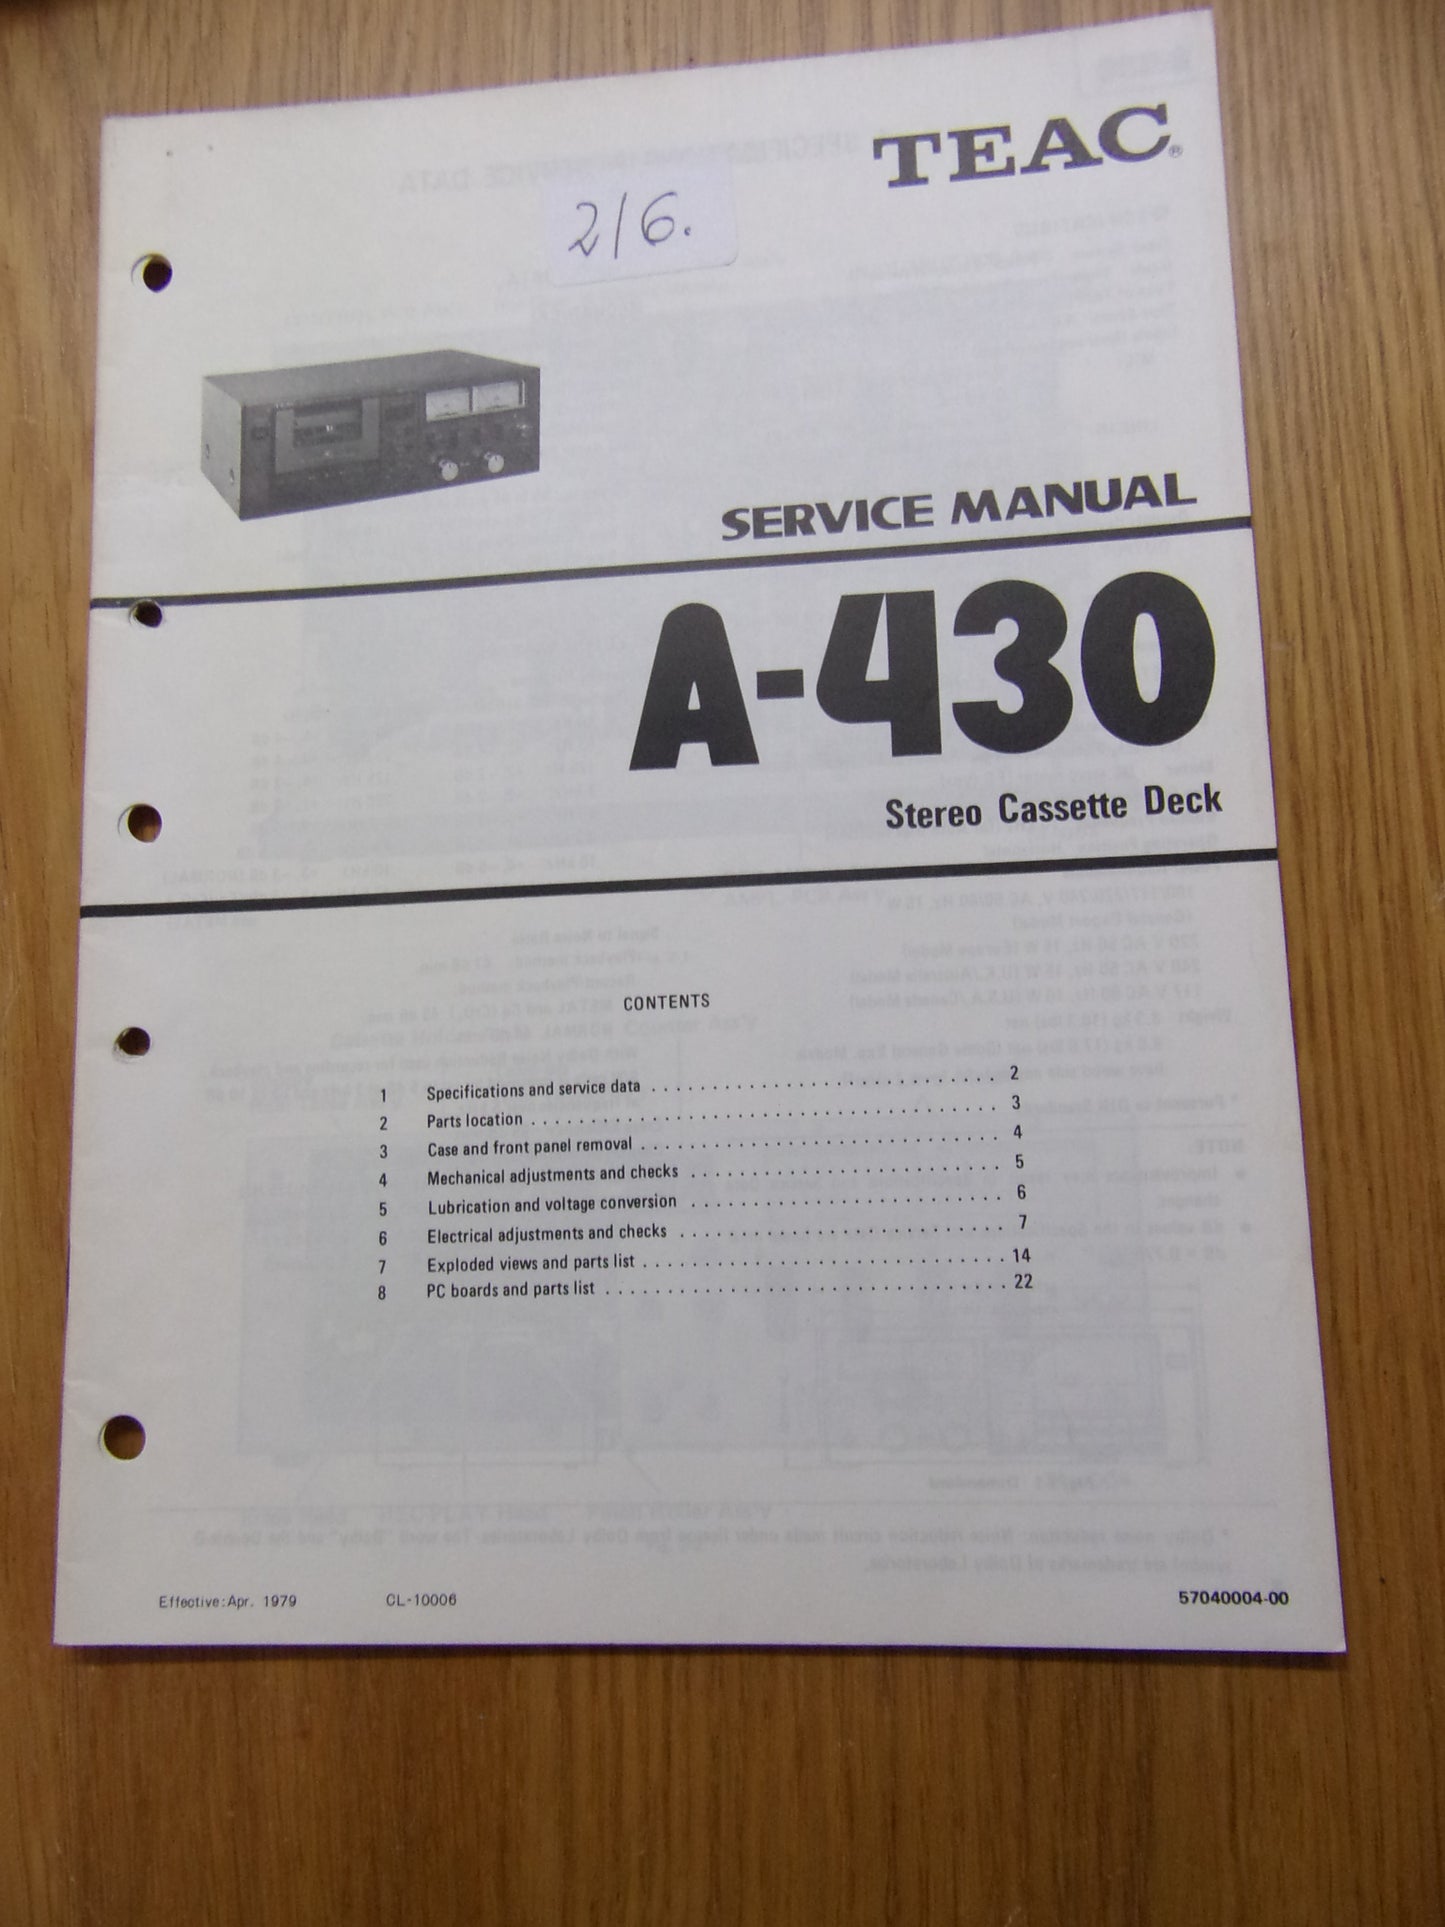 TEAC A-430 service manual